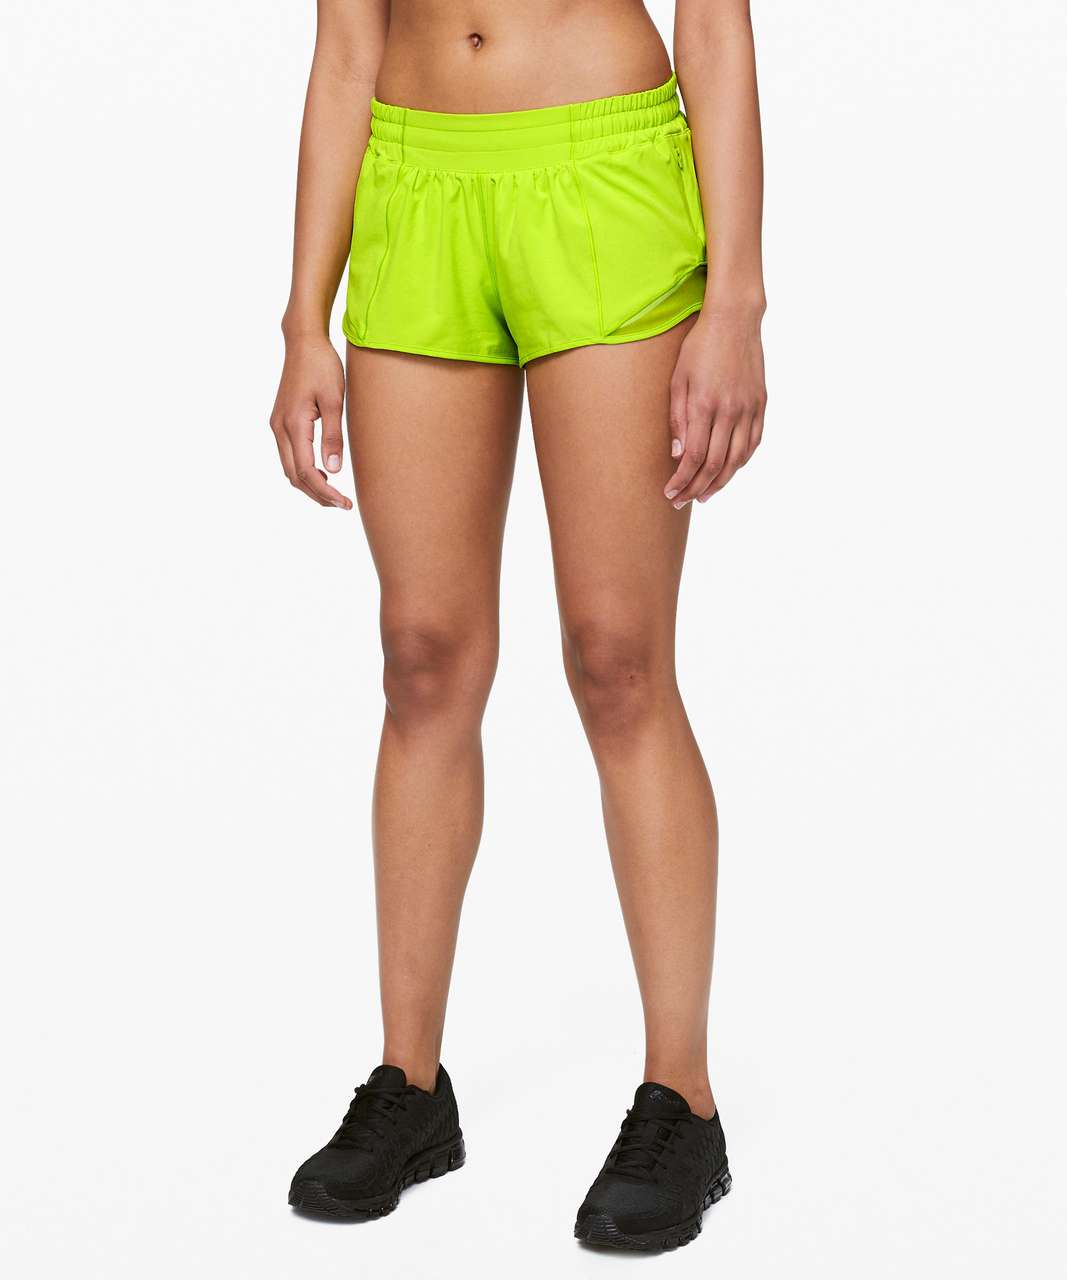 lululemon lime green shorts